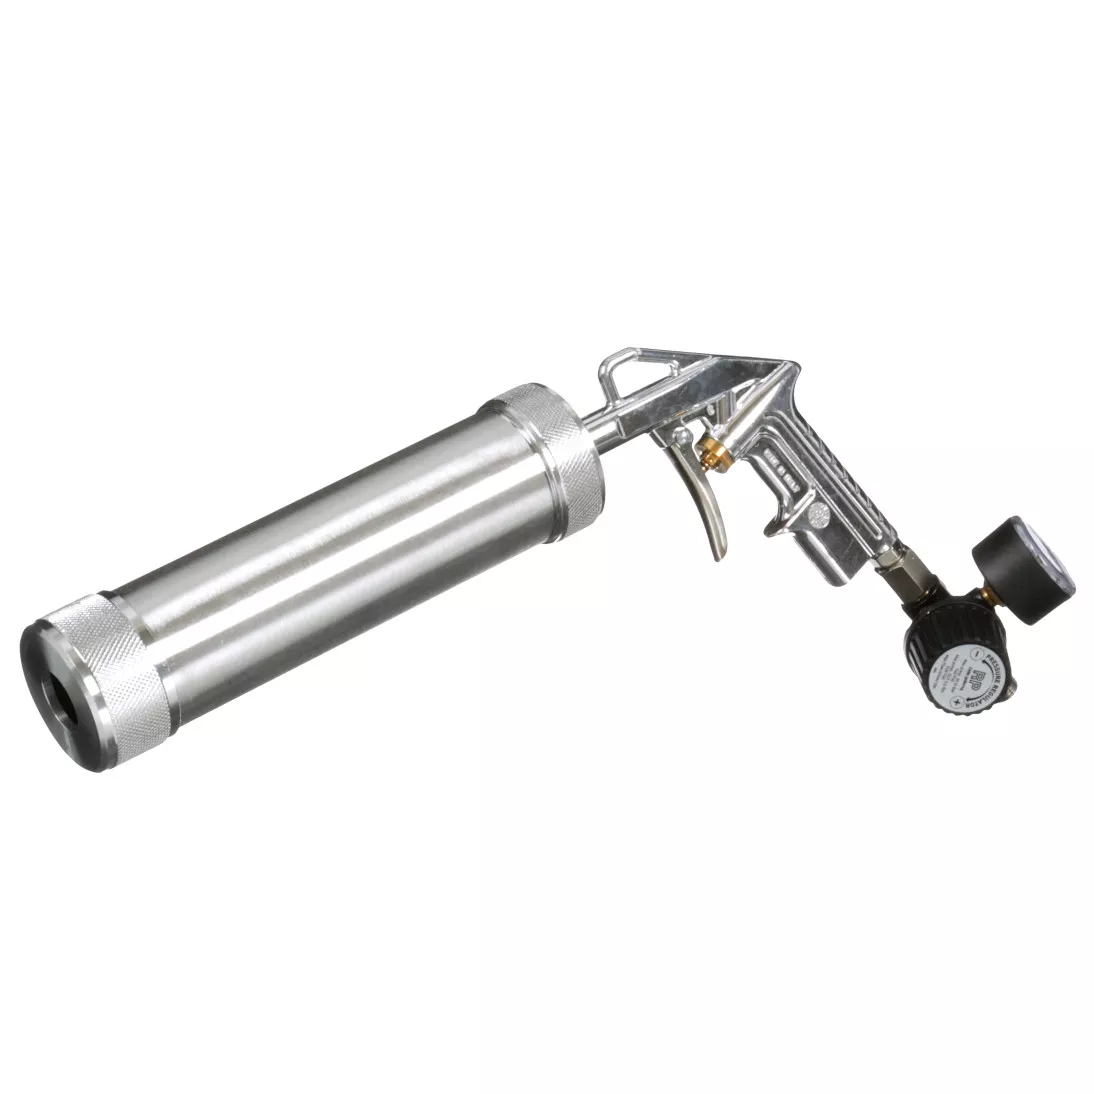 3M™ Single Cartridge Applicator Gun with Regulator, 38373, 1 per case